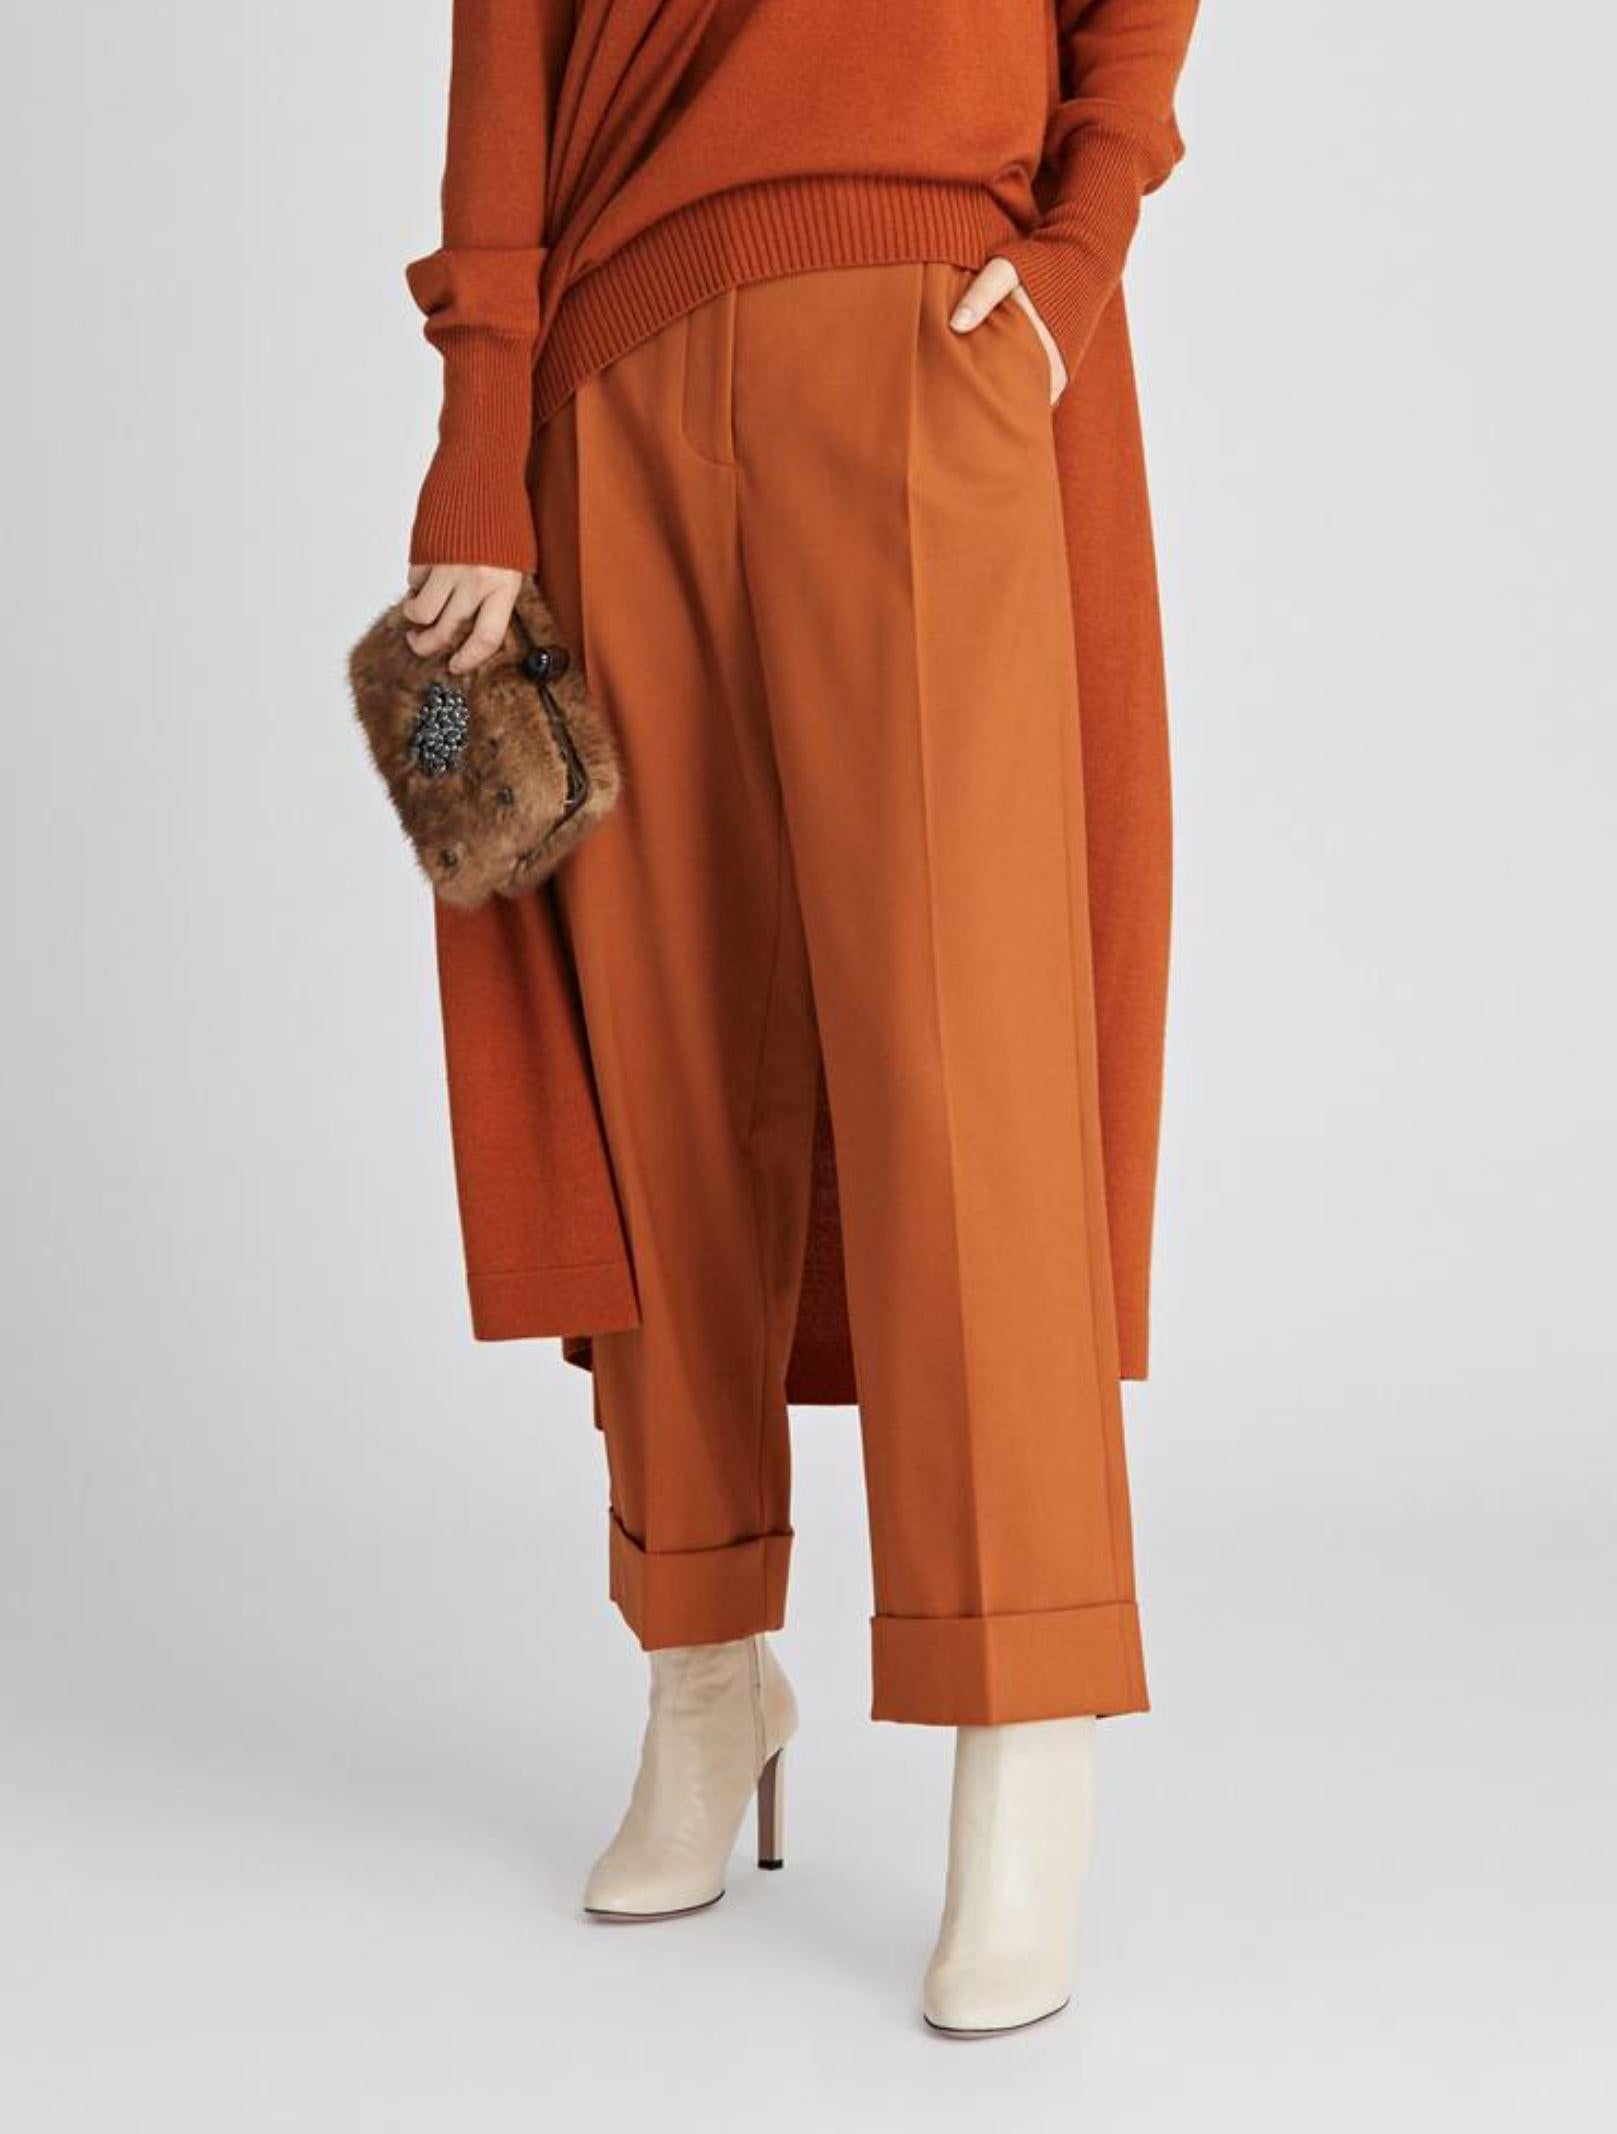 Women's New Oscar De La Renta Fall 2019 Gigi Hadid Leather Booties Boots Size 38.5 $1225